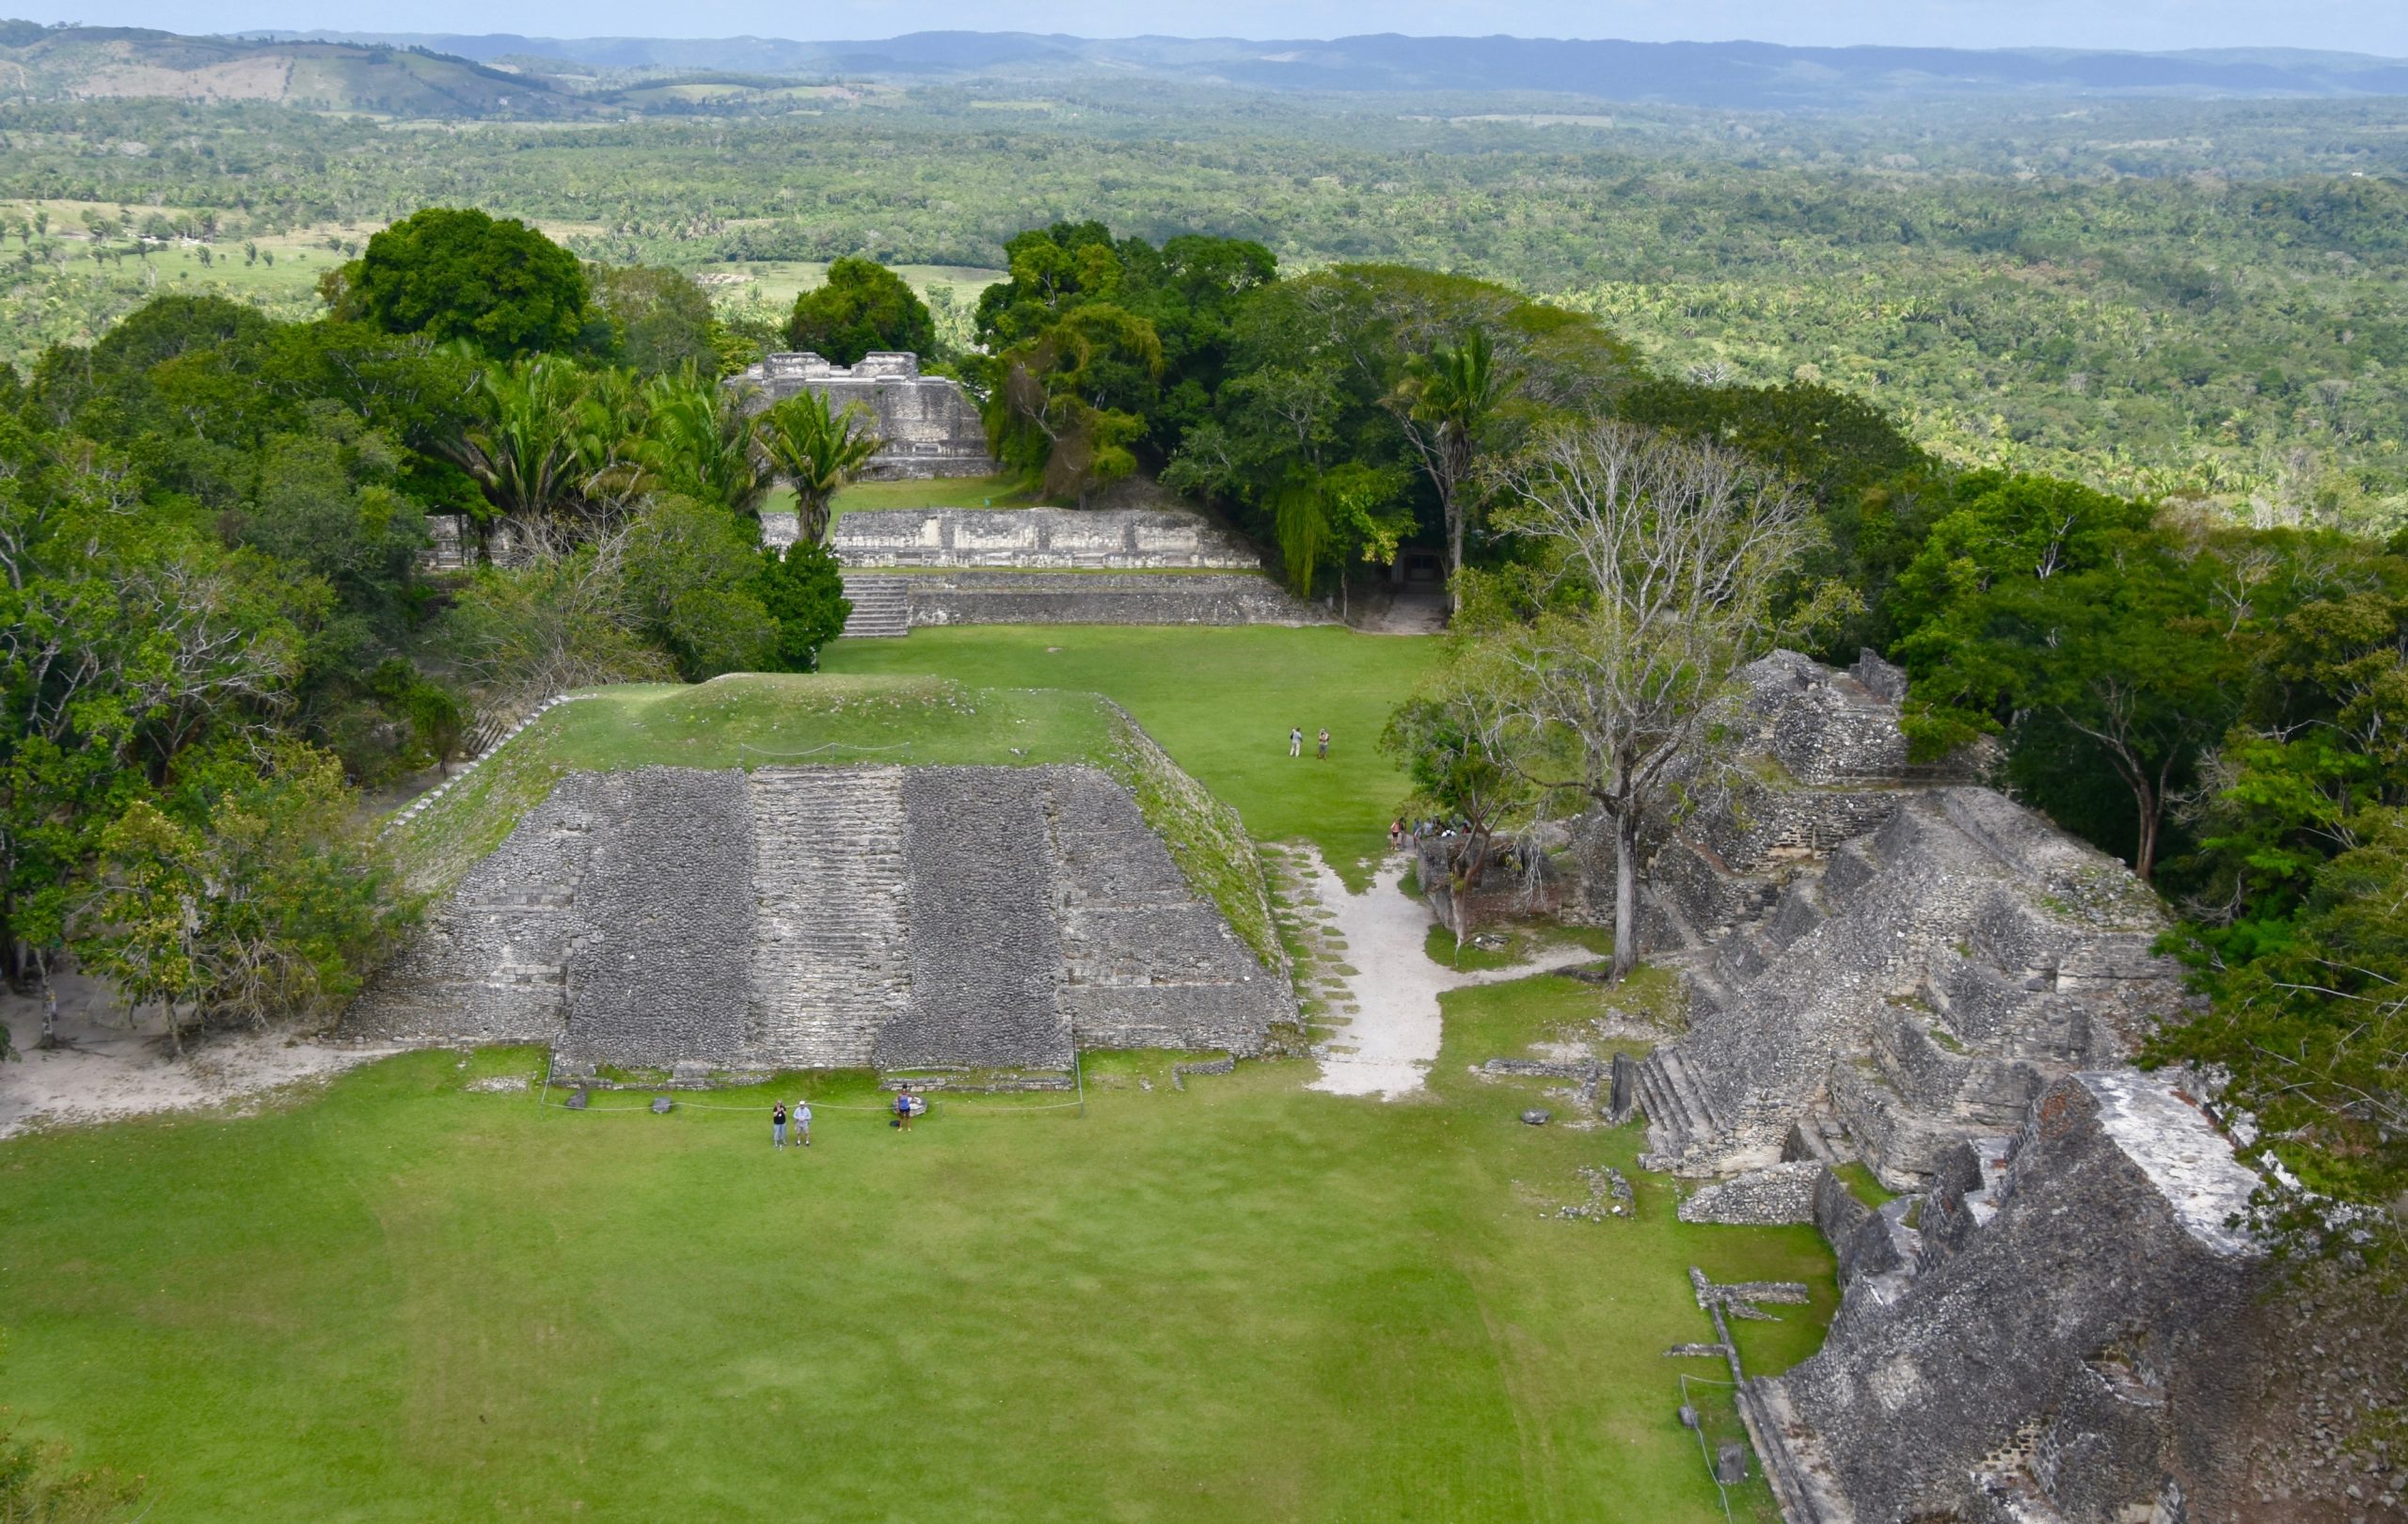 View from El Castillo, Belize